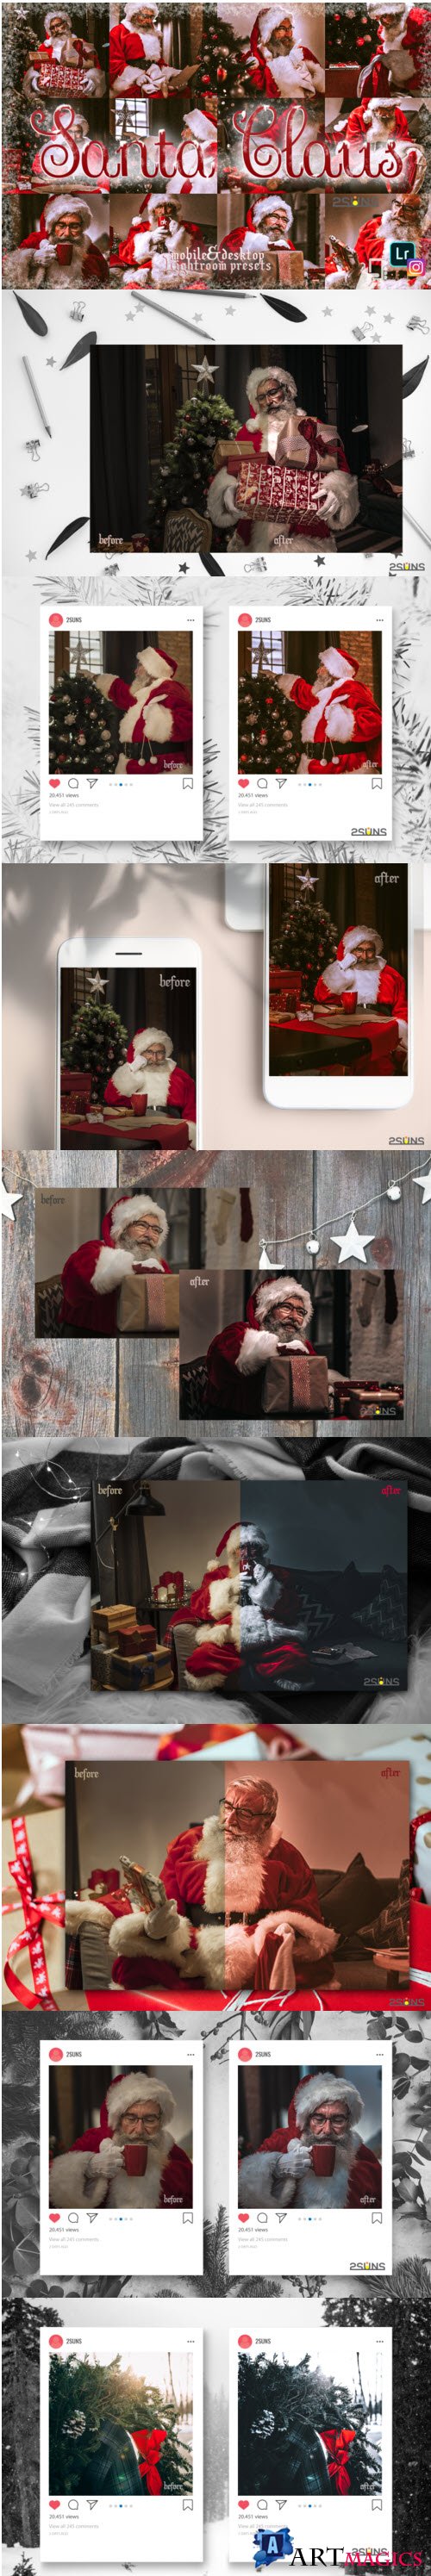 5 Santa Claus lightroom presets winter preset Christmas - 392807